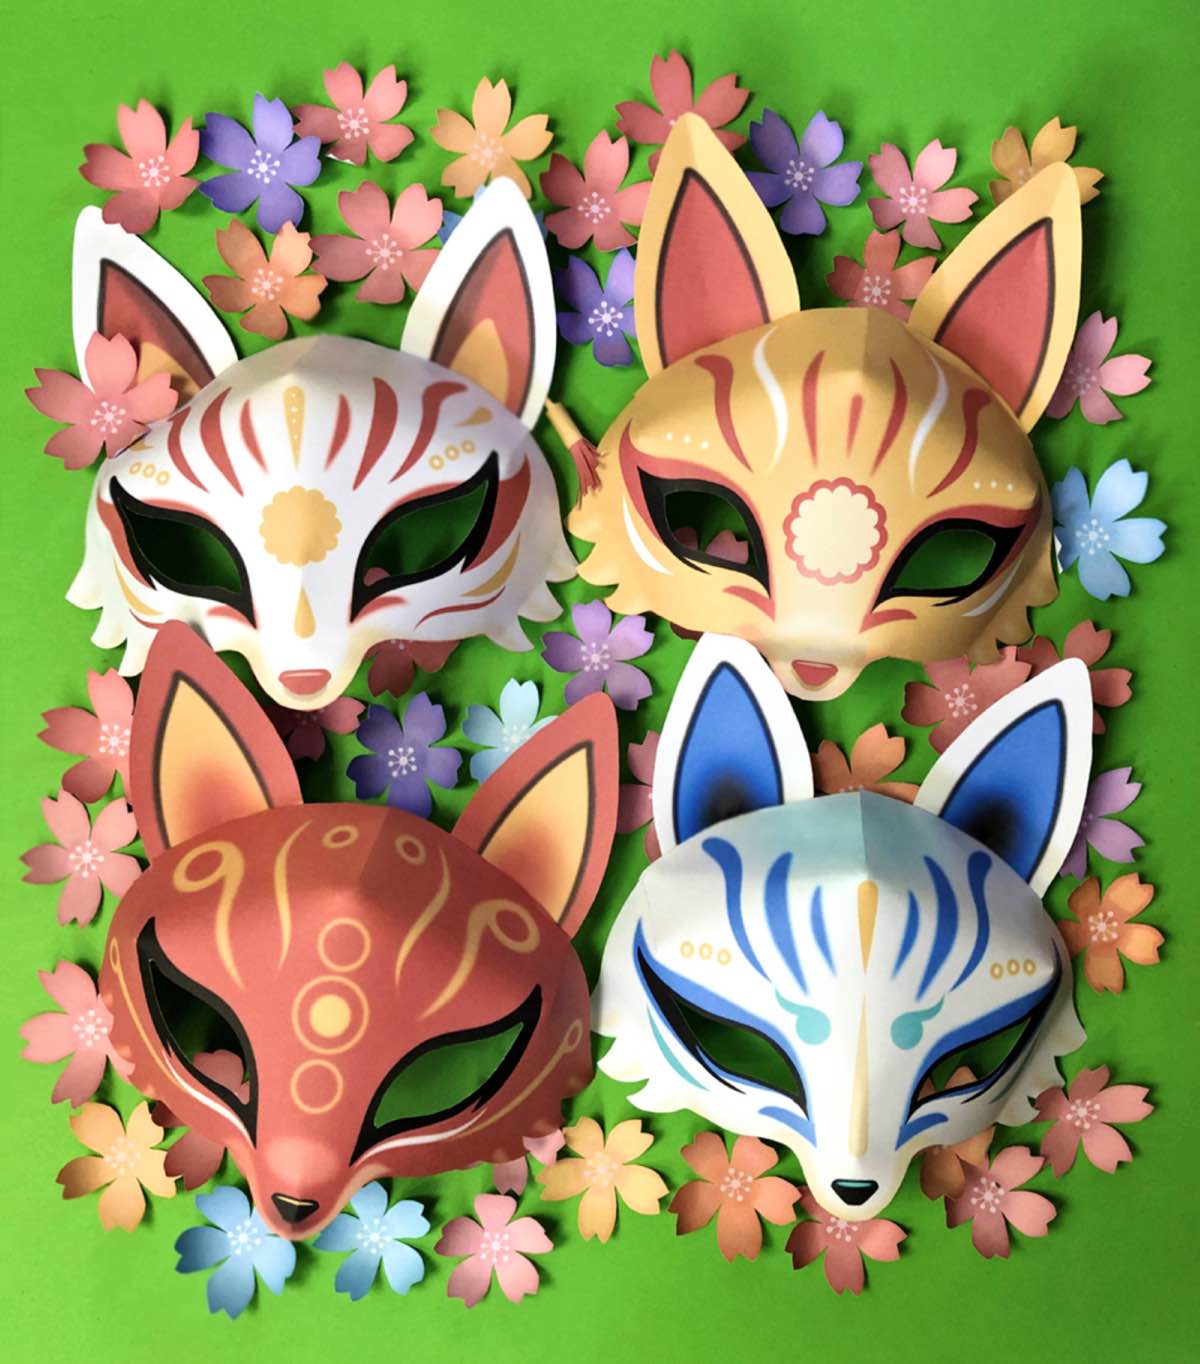 Kitsune fox mask template. DIY mask costumes • Happythought